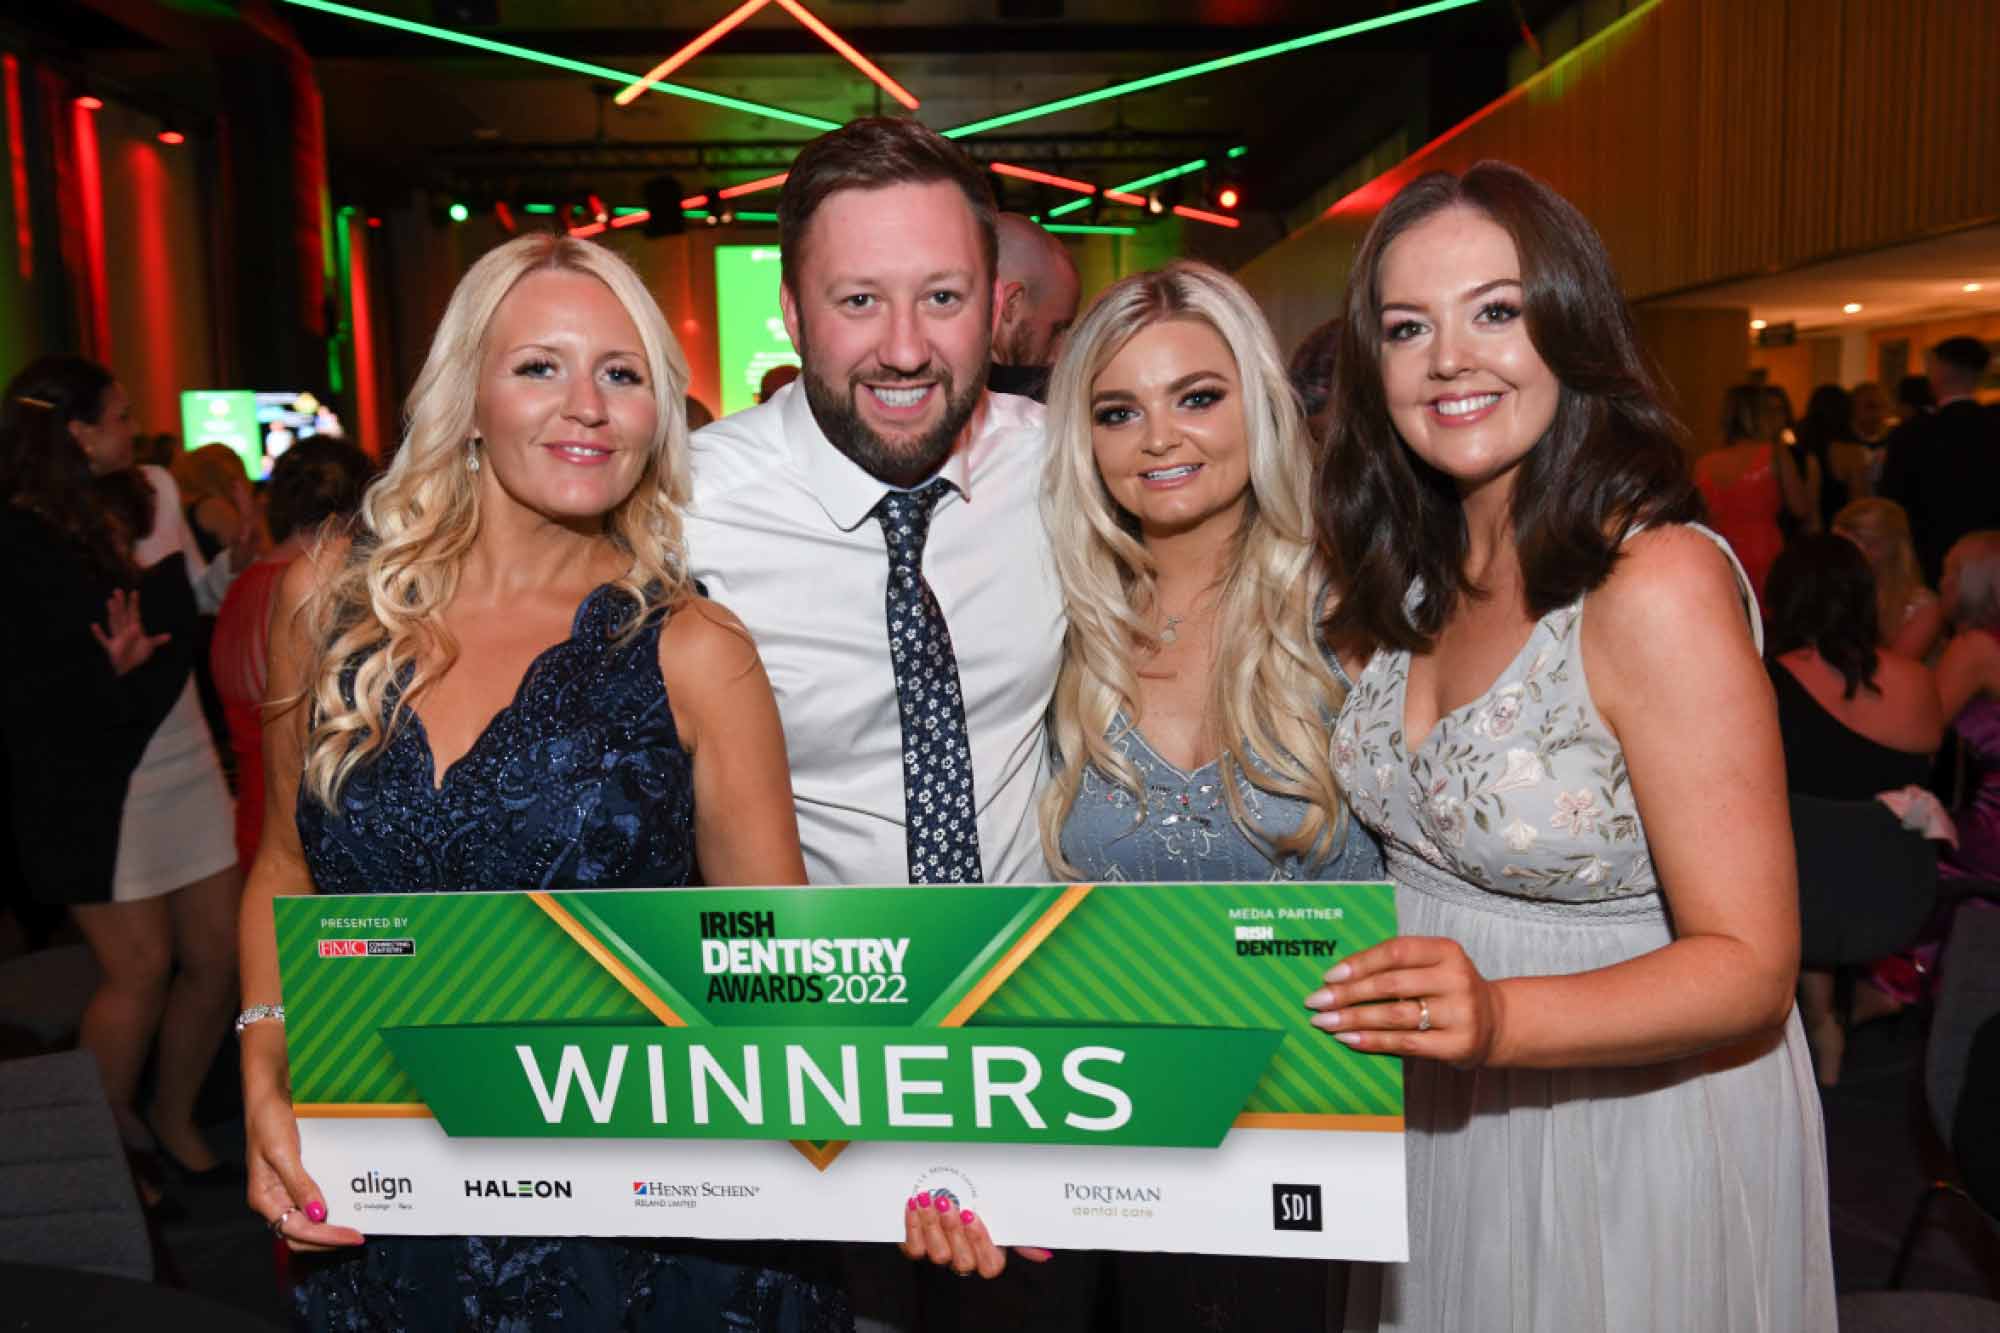 Winners at the Irish Dentistry Awards